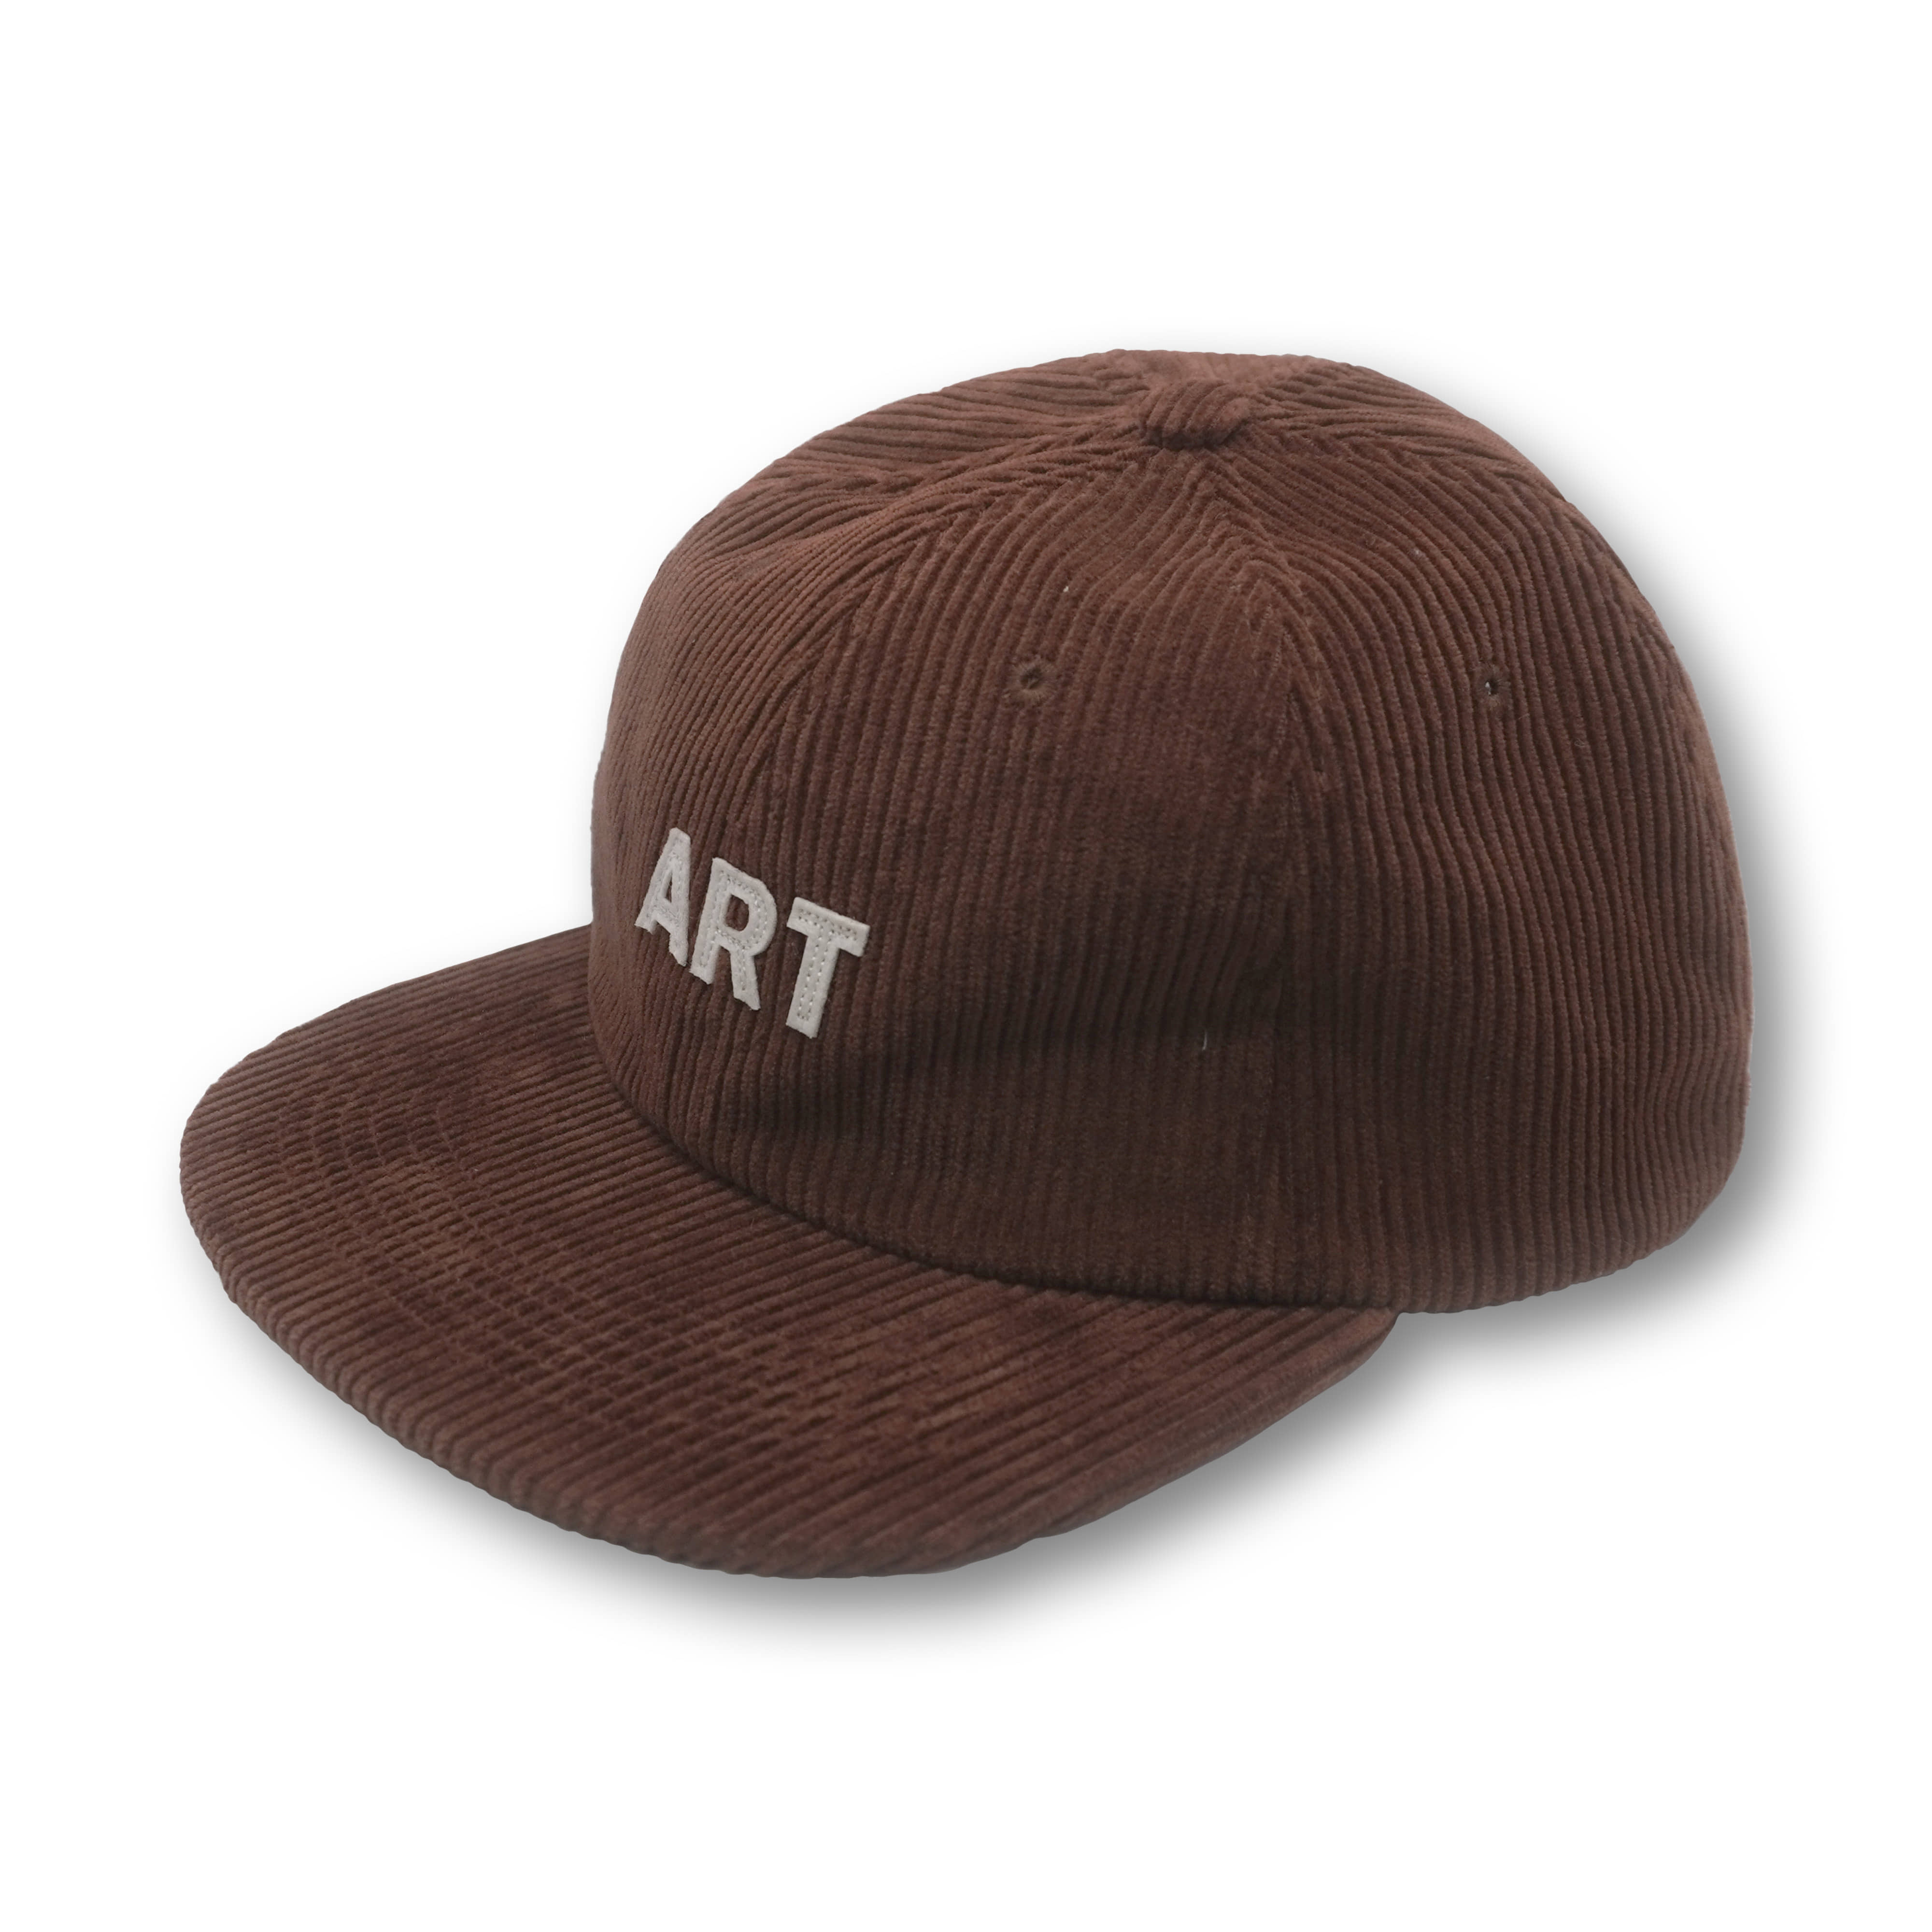 ARTLIFE CAP BROWNAMFEAST(암피스트)